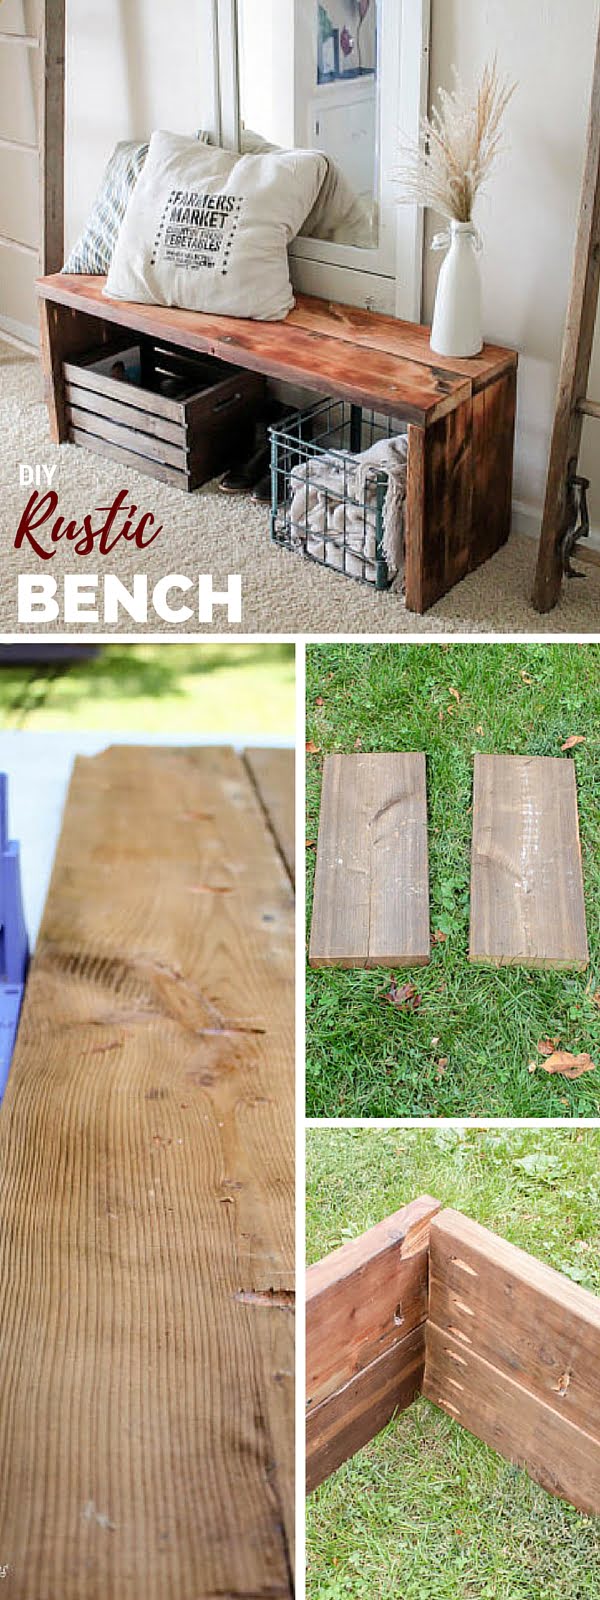  Rustic Bench   